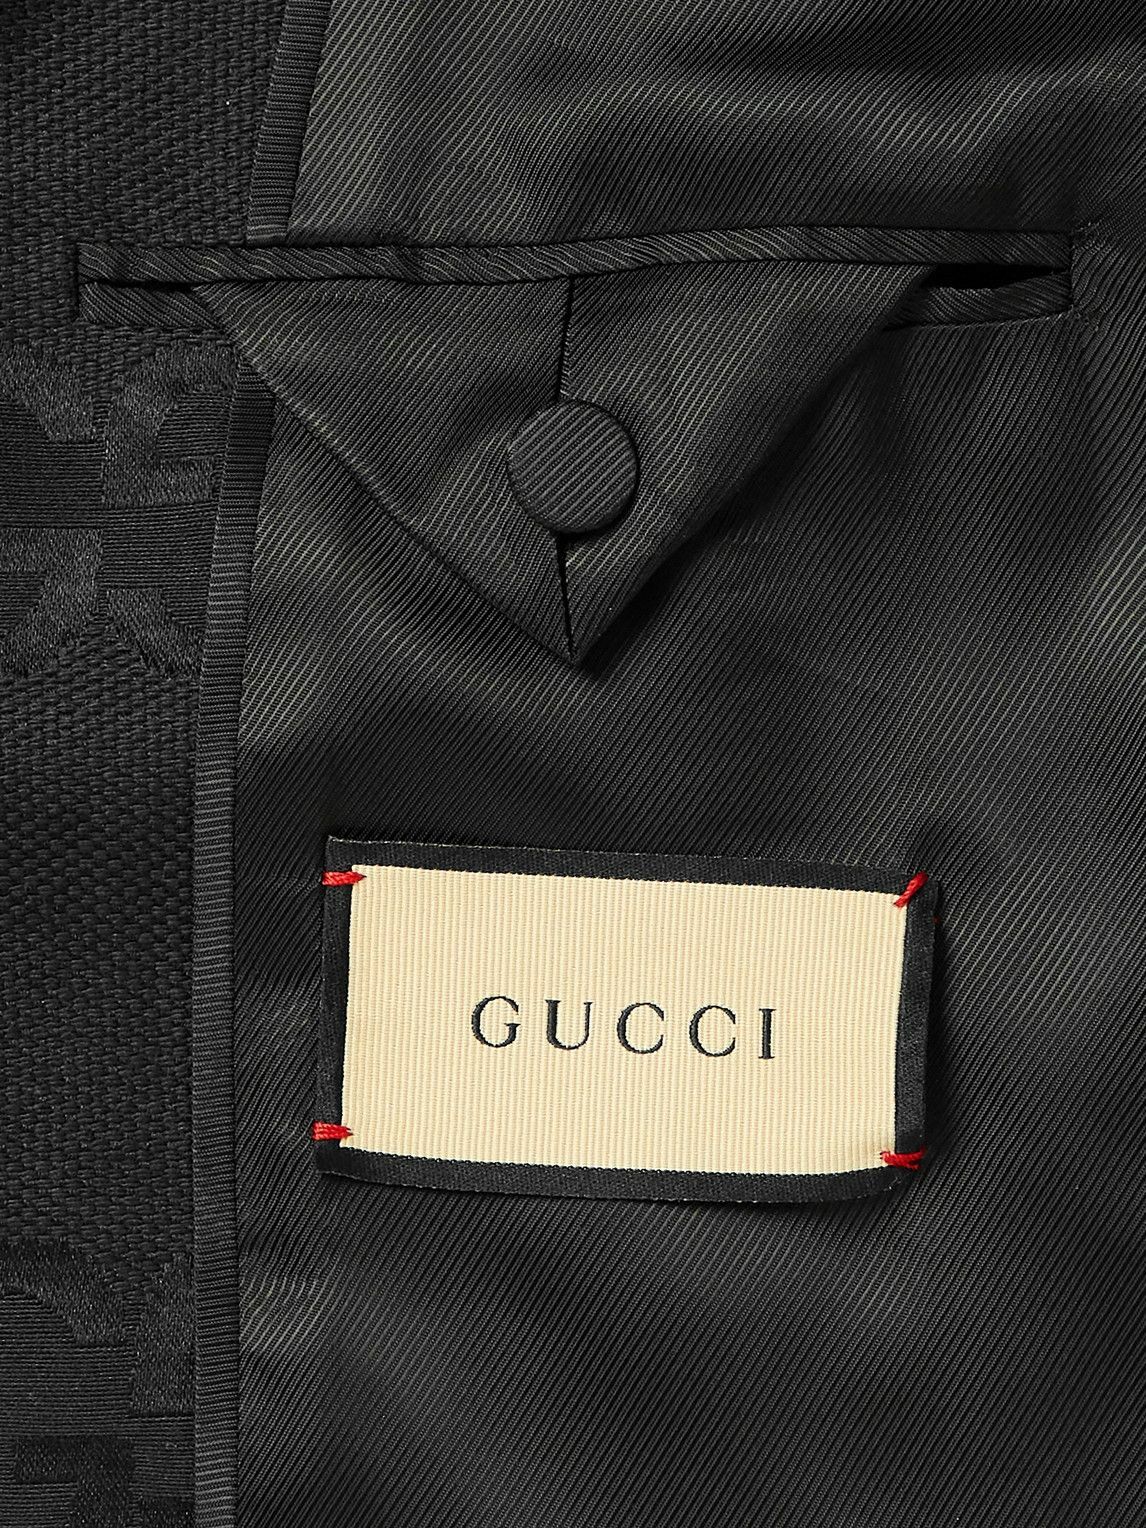 GUCCI - Oversized Logo-Jacquard Cotton-Blend Canvas Blazer - Black Gucci